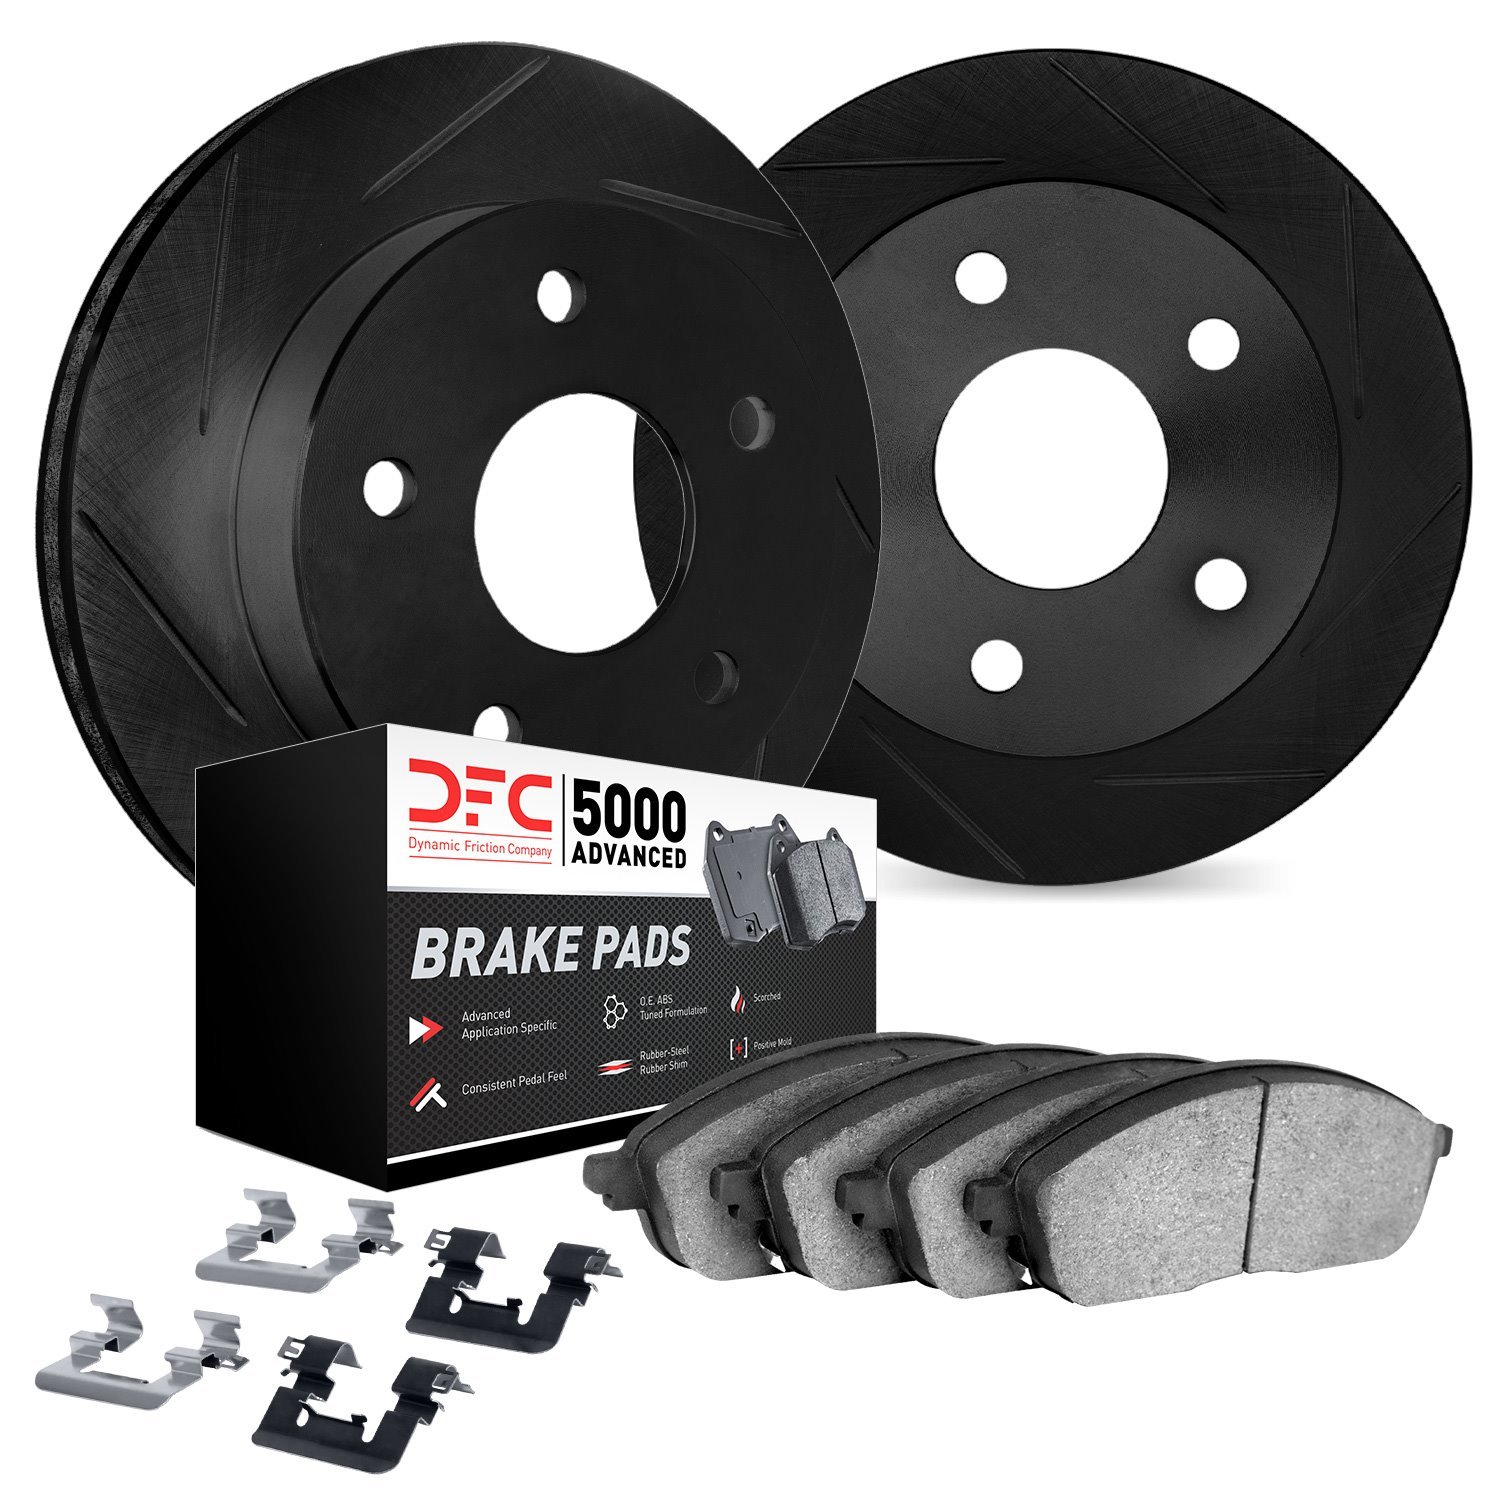 3512-80067 Slotted Brake Rotors w/5000 Advanced Brake Pads Kit & Hardware [Black], 2007-2015 Ford/Lincoln/Mercury/Mazda, Positio